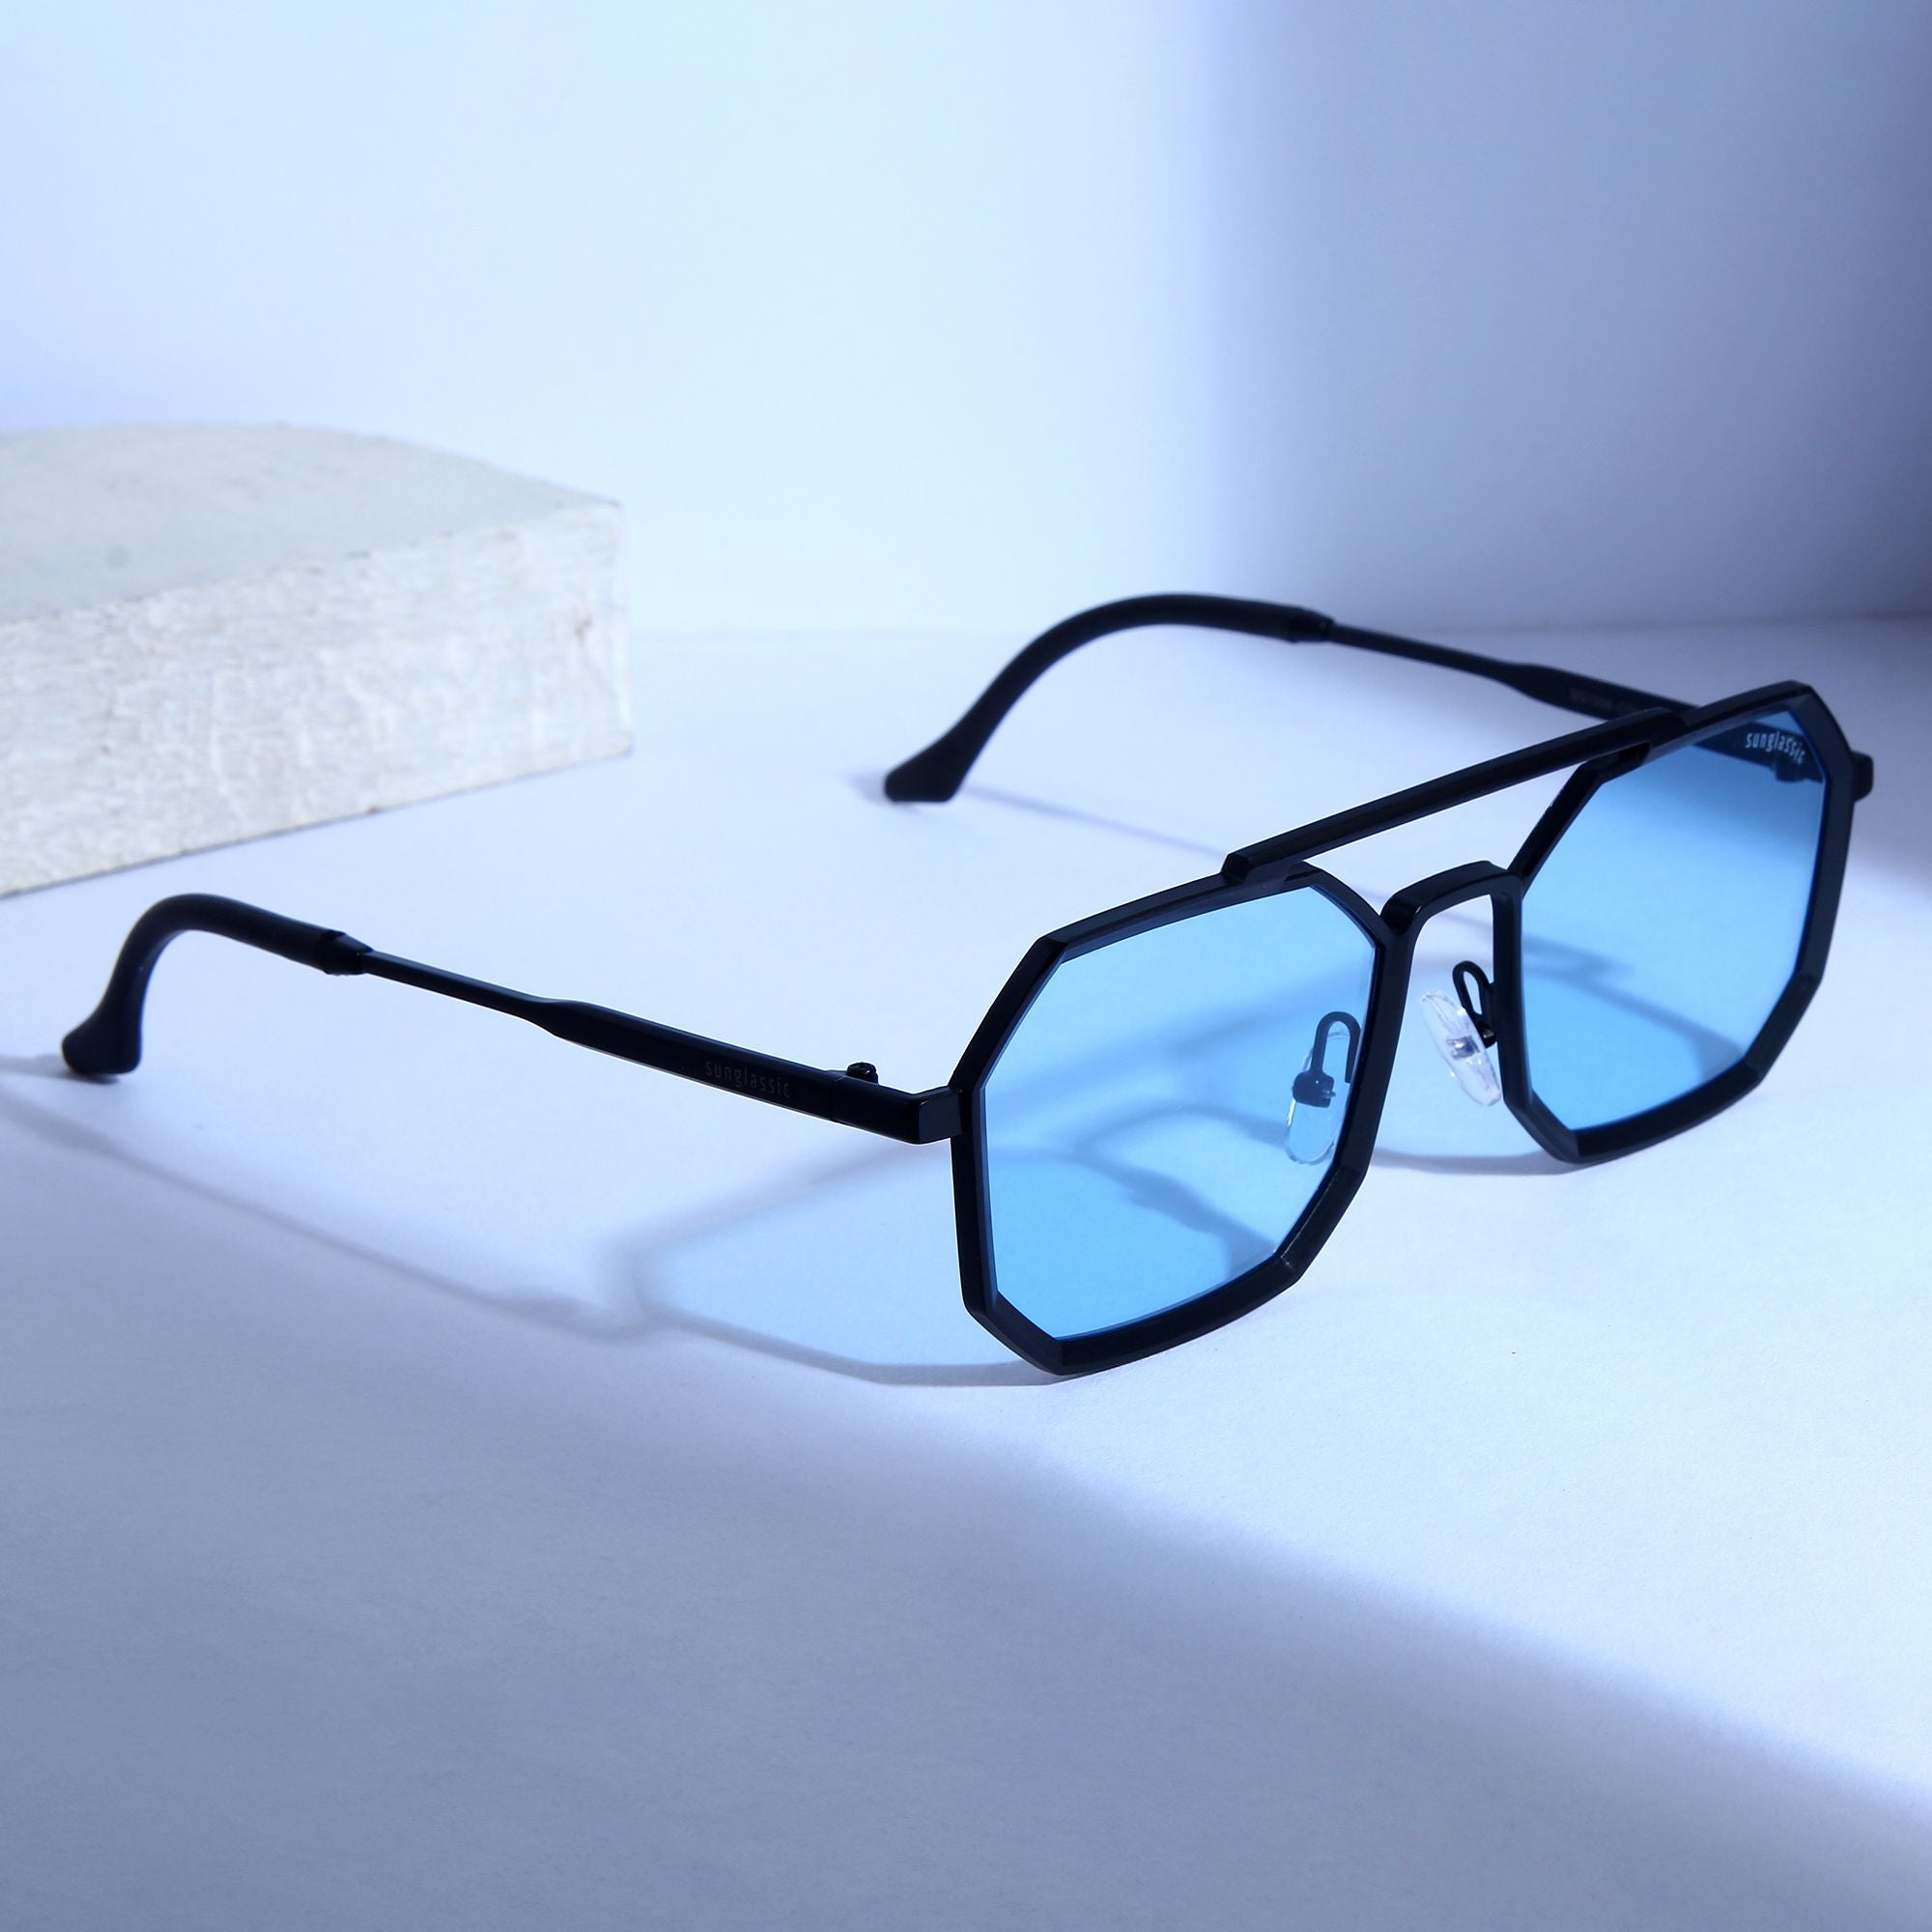 Commando Black Blue Edition Octagon Sunglasses by Sunglassic. Sunglasses with a stylish octagonal shape.